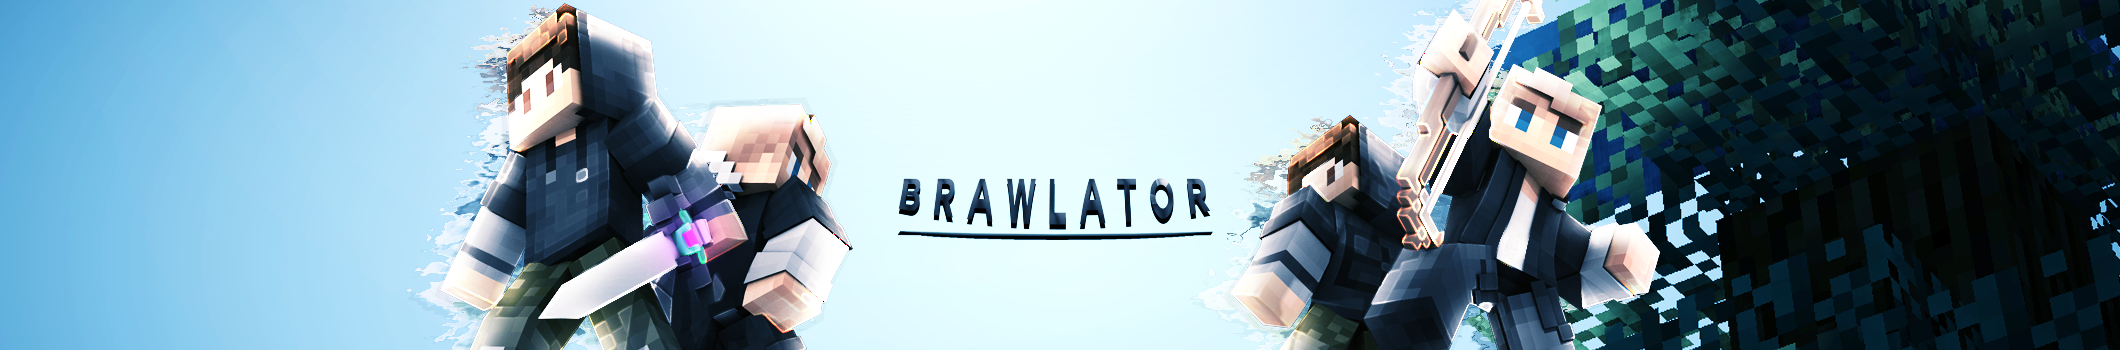 brawlator banner small.png